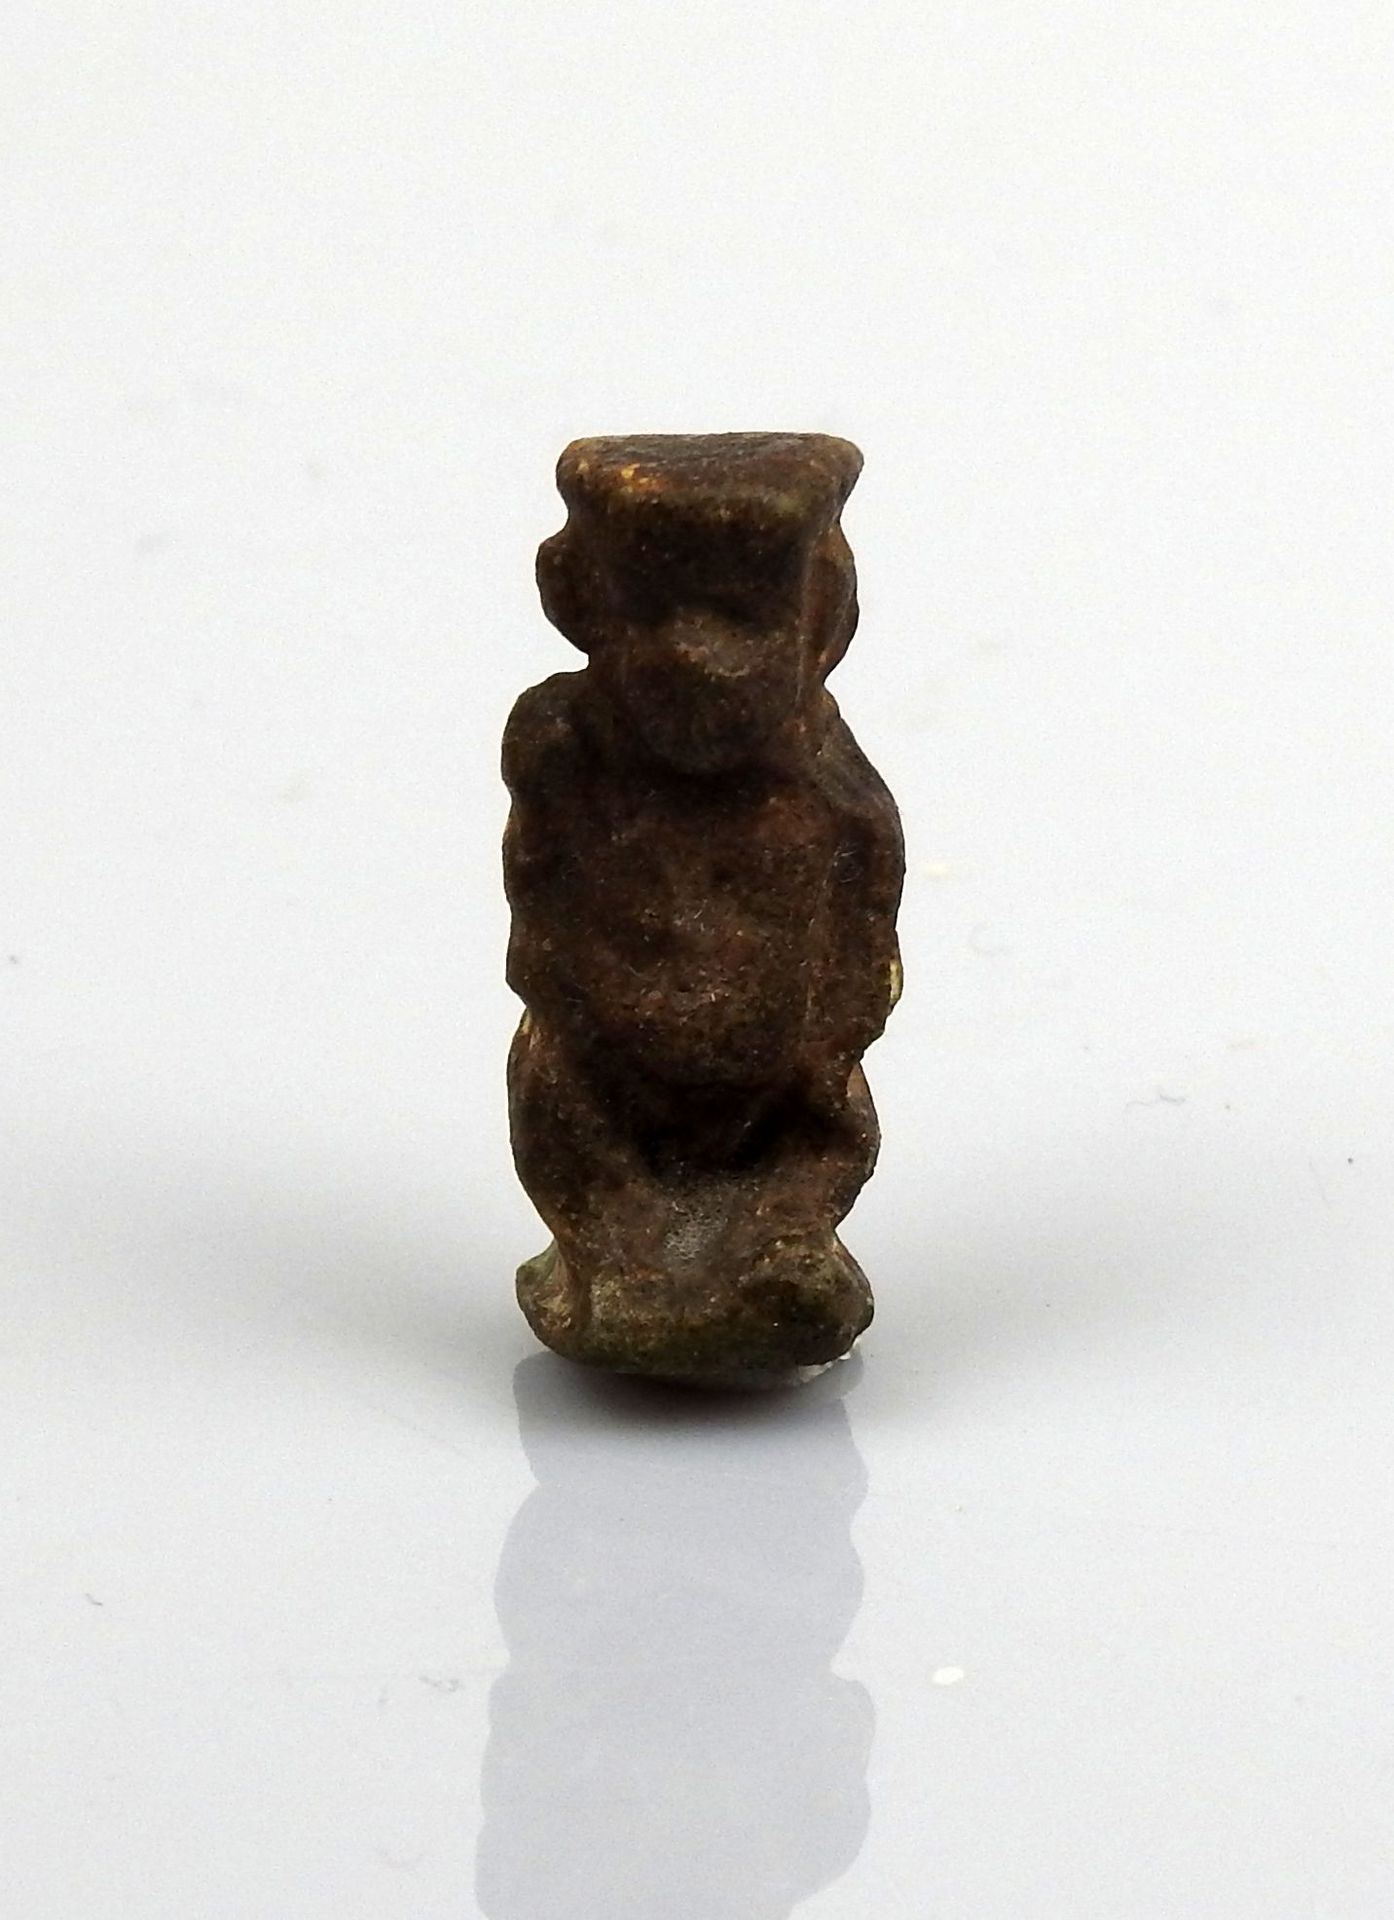 Null Amuleto che rappresenta Bes

Fritta 2,5 cm

Egitto Tarda dinastia XXVI-XXX